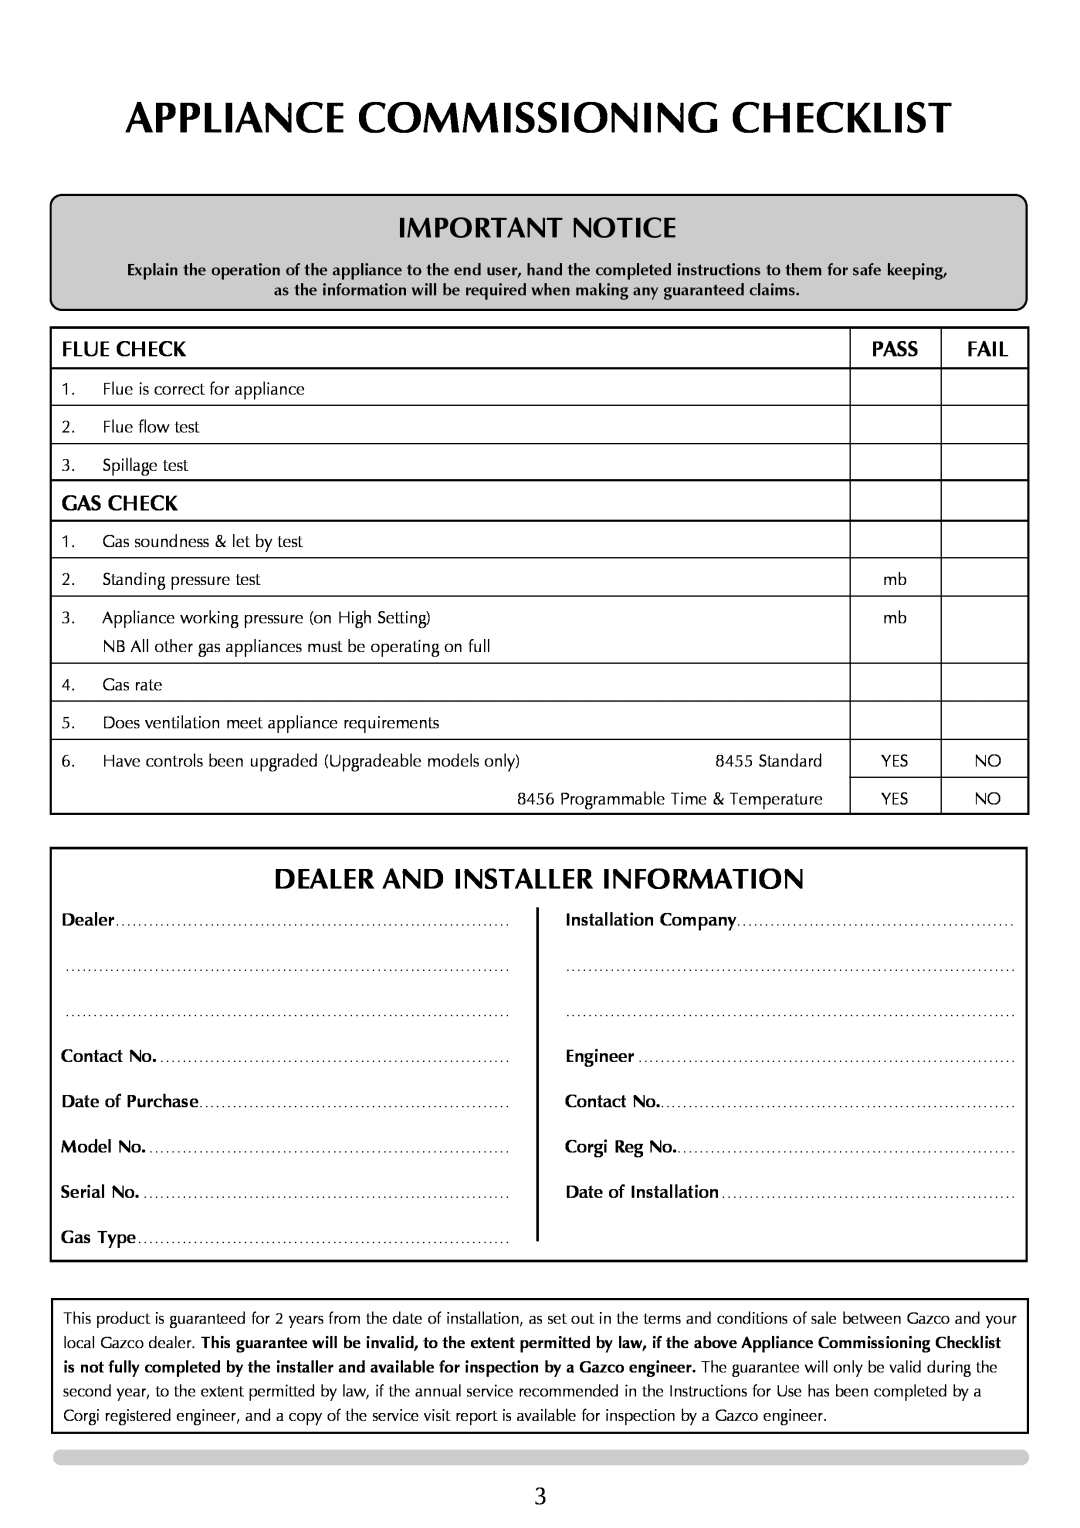 Stovax Gazco Ceremica Log Effect Stove Range Appliance Commissioning Checklist, Important Notice, Flue Check, Pass, Fail 